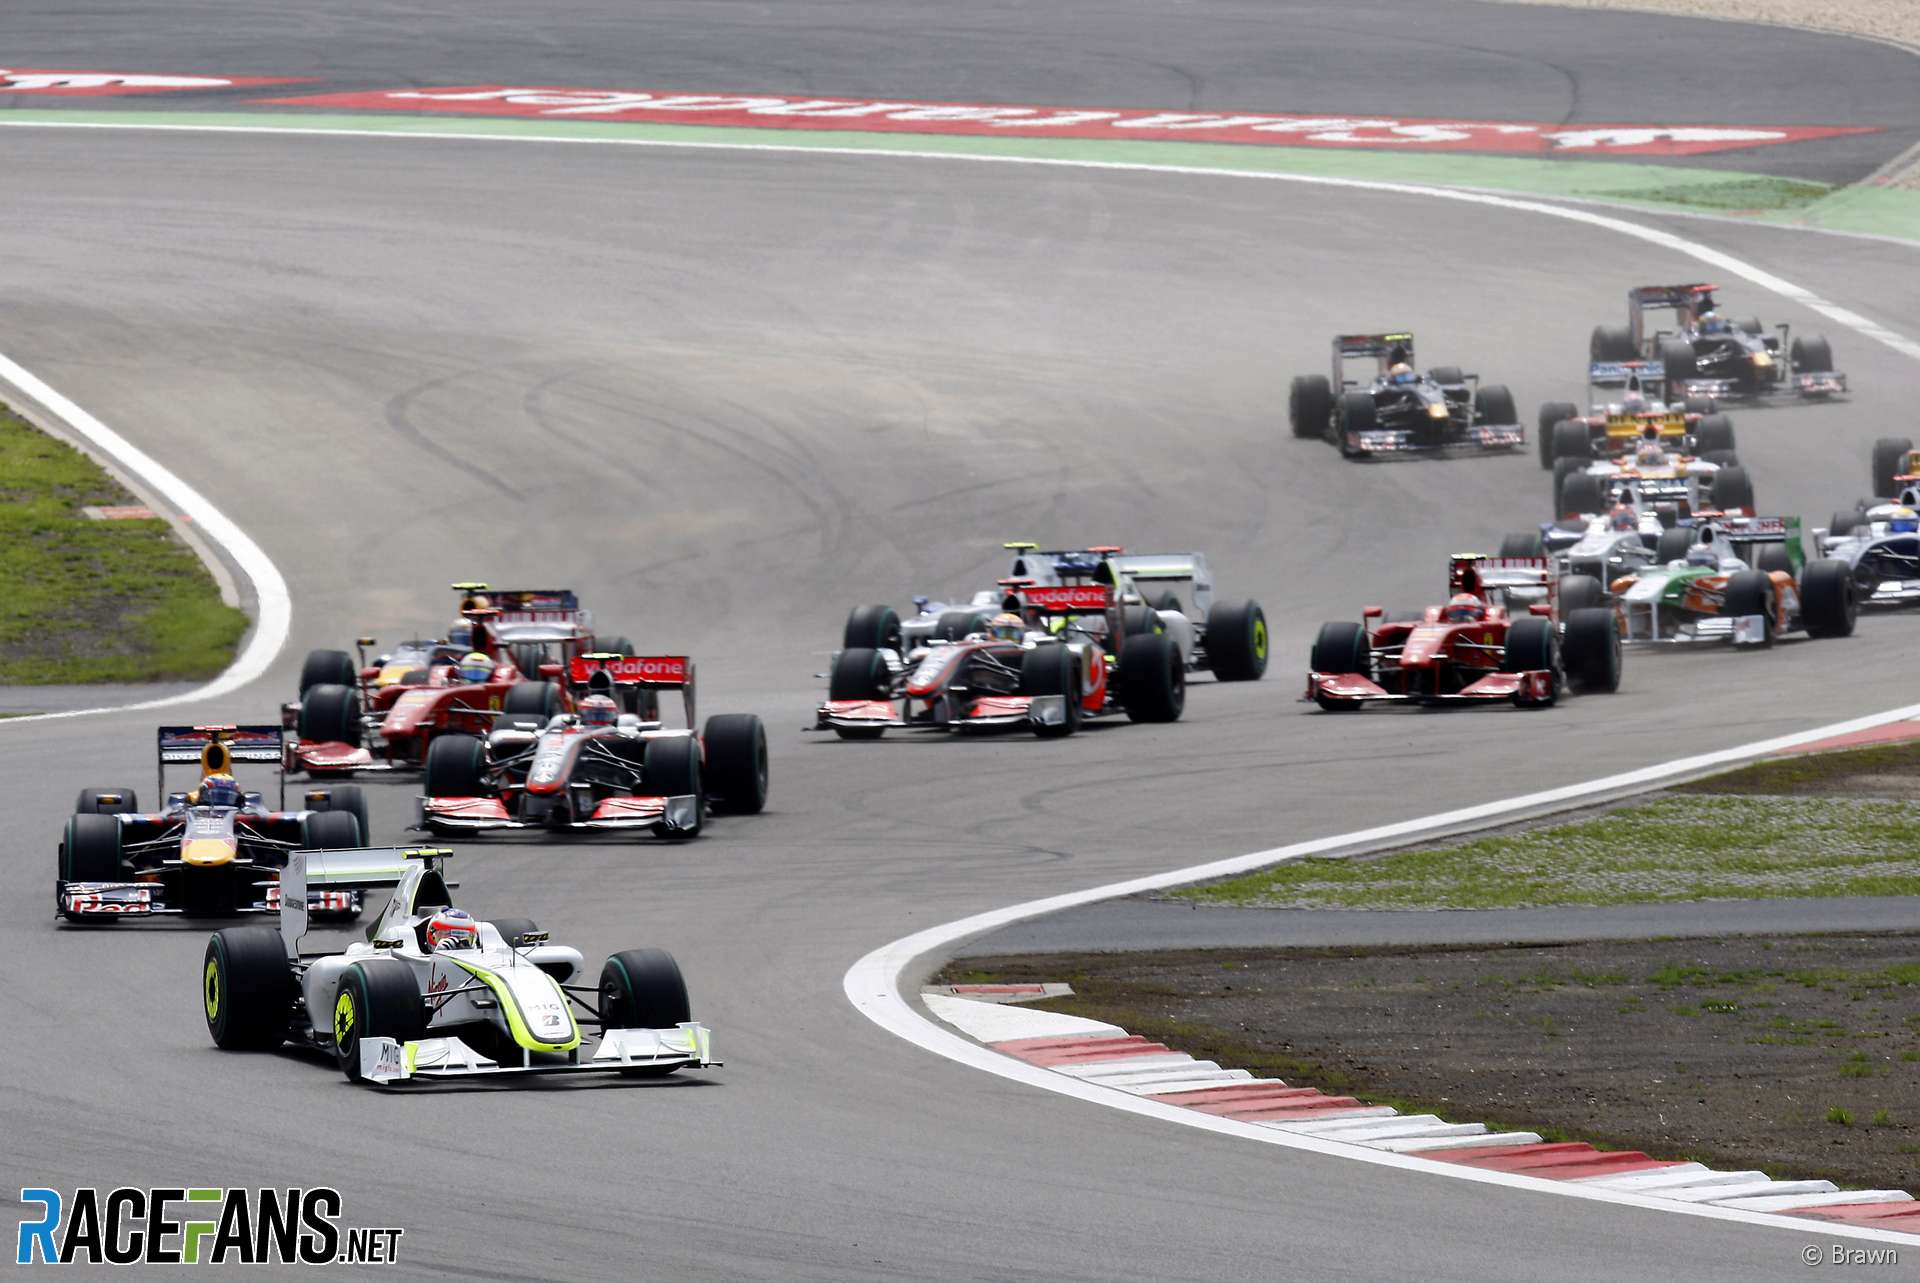 2009 German Grand Prix start